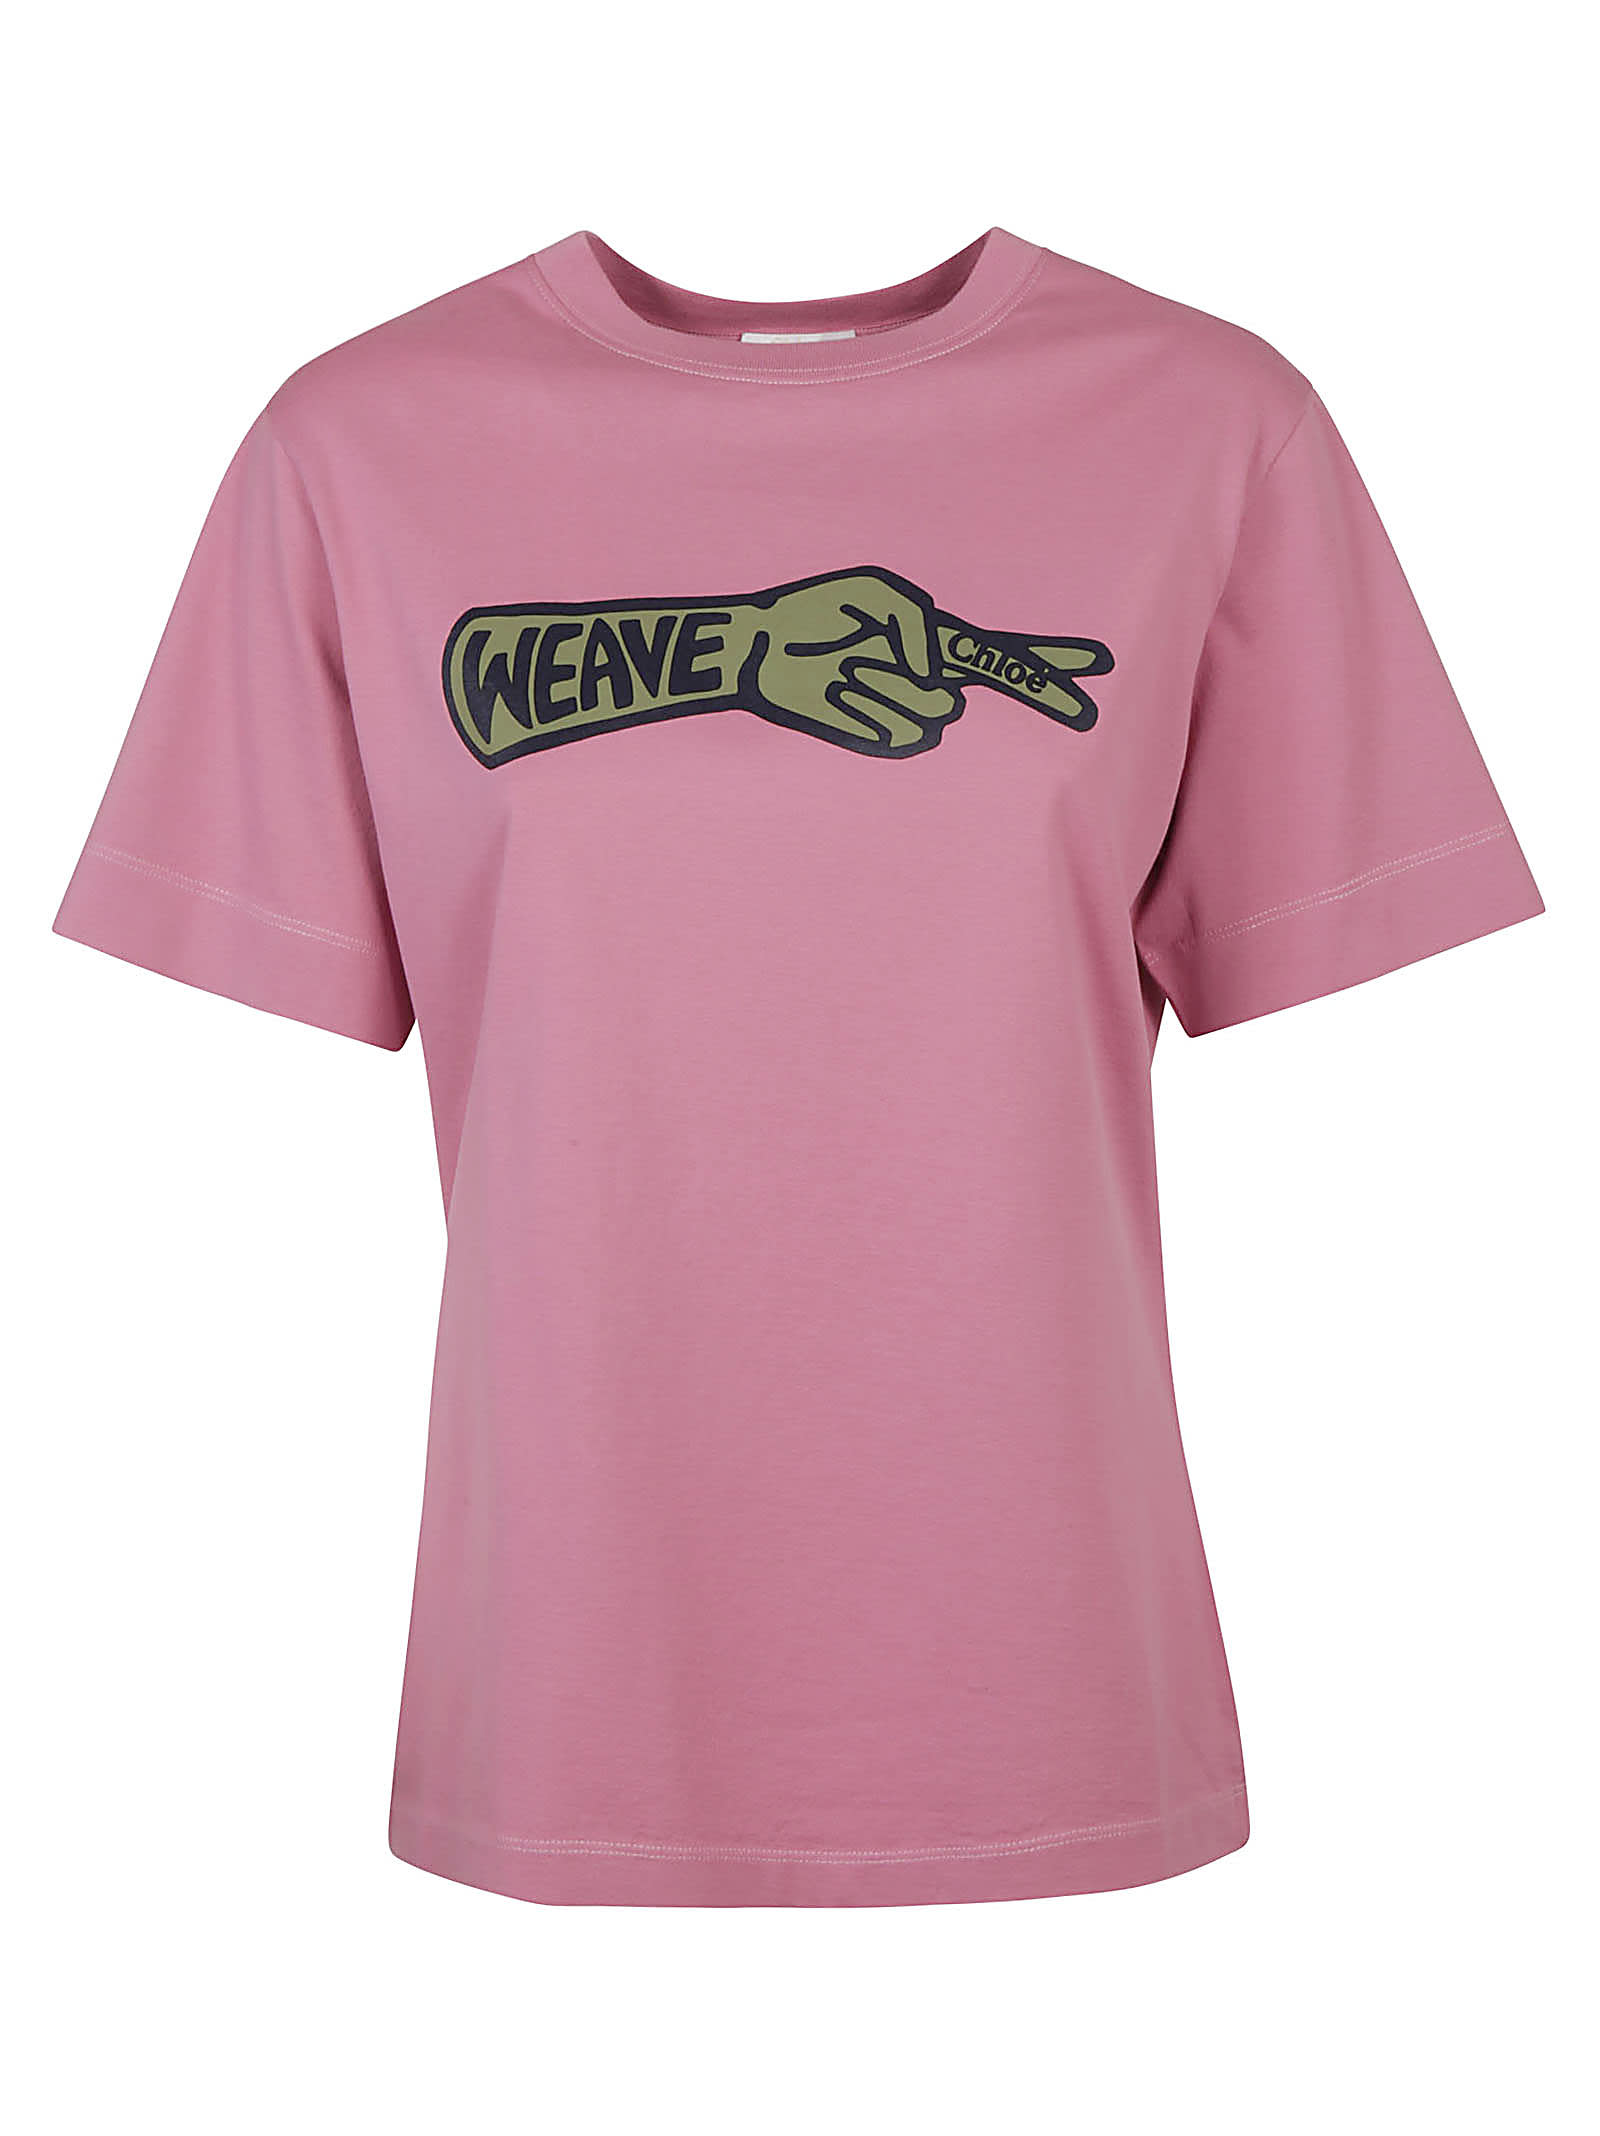 Chloé Weave Hand Print Logo T-shirt